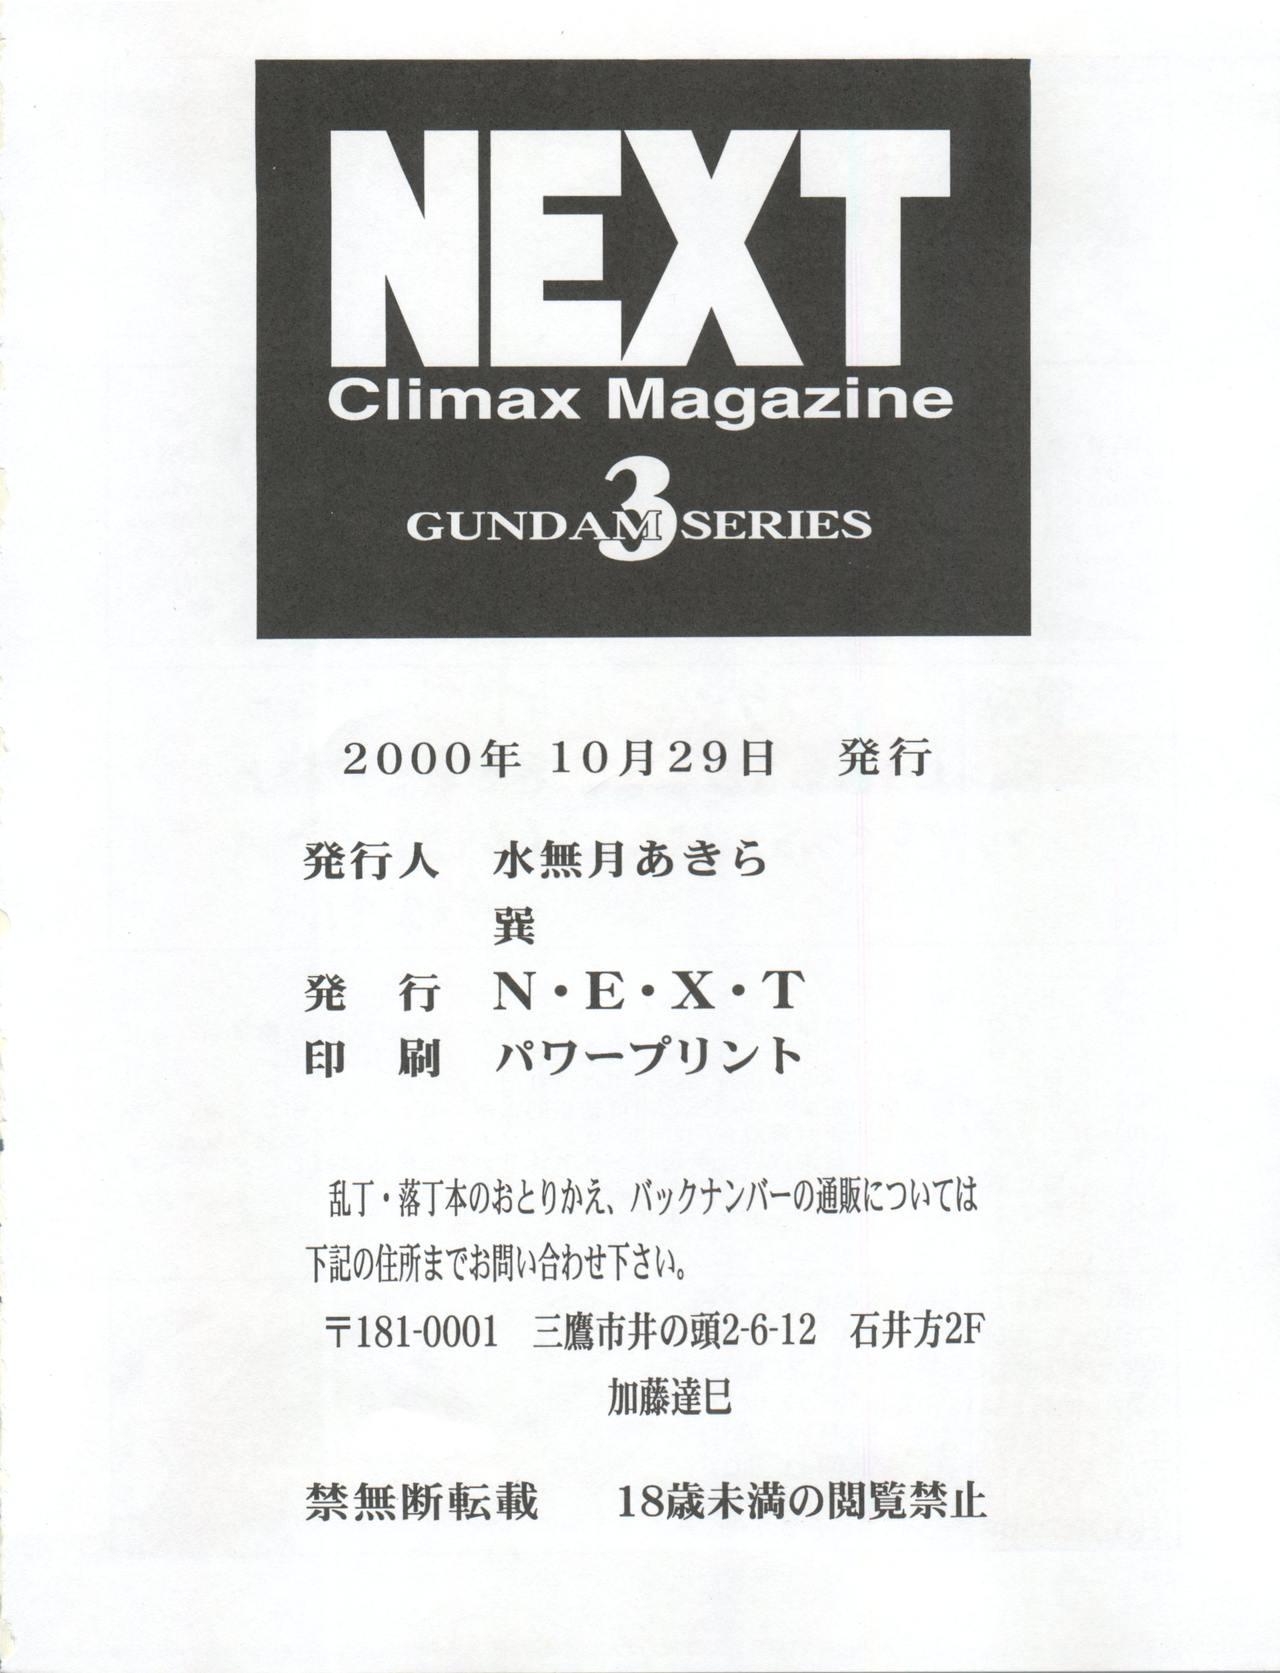 NEXT Climax Magazine 3 Gundam Series 101